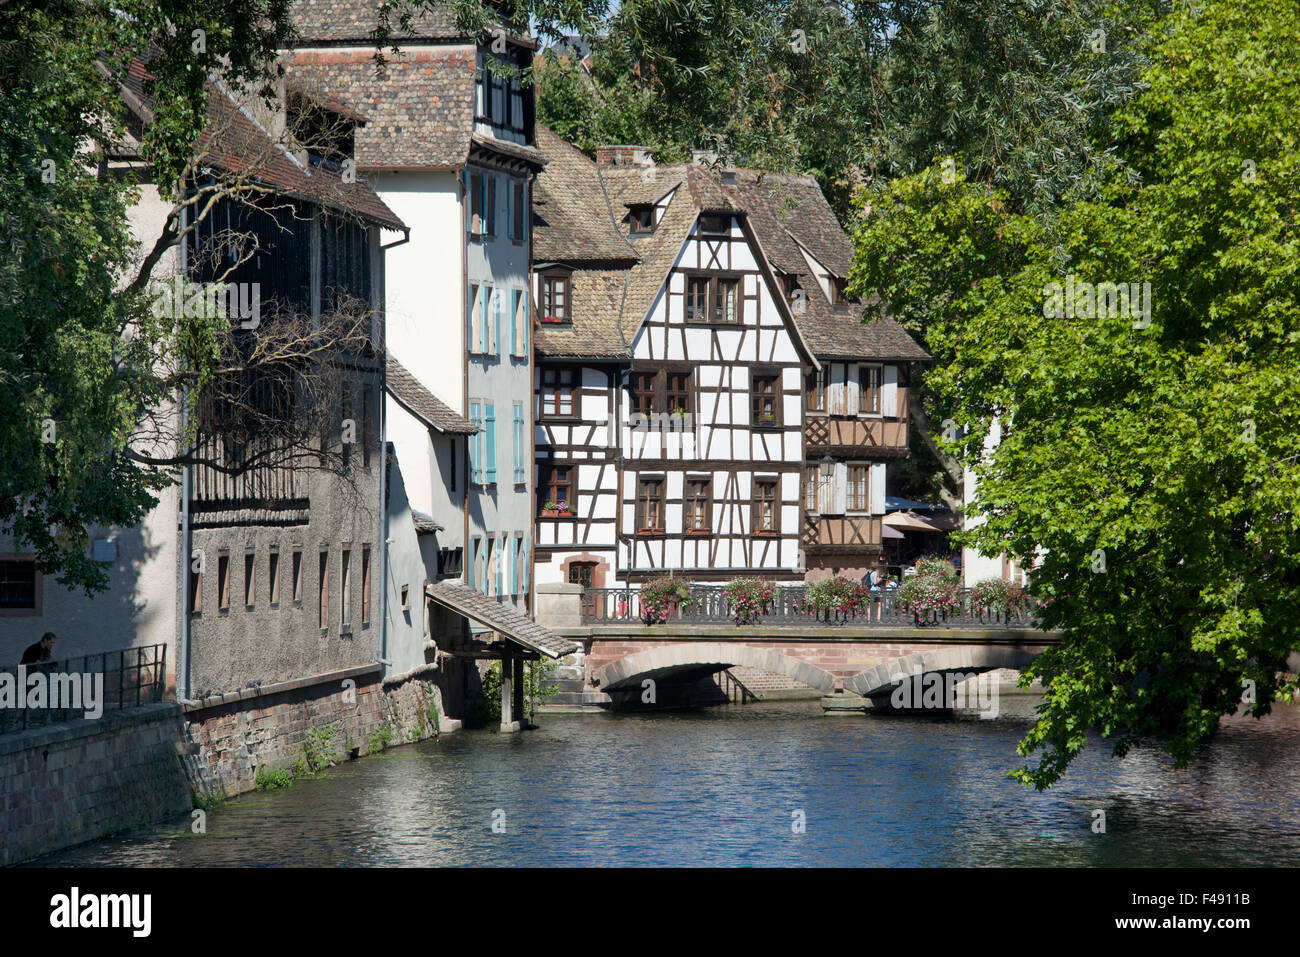 Traditionelle halbe Fachwerkhaus Riverside Gebäude Fluss Ill Petite France Straßburg Elsass Frankreich Stockfoto